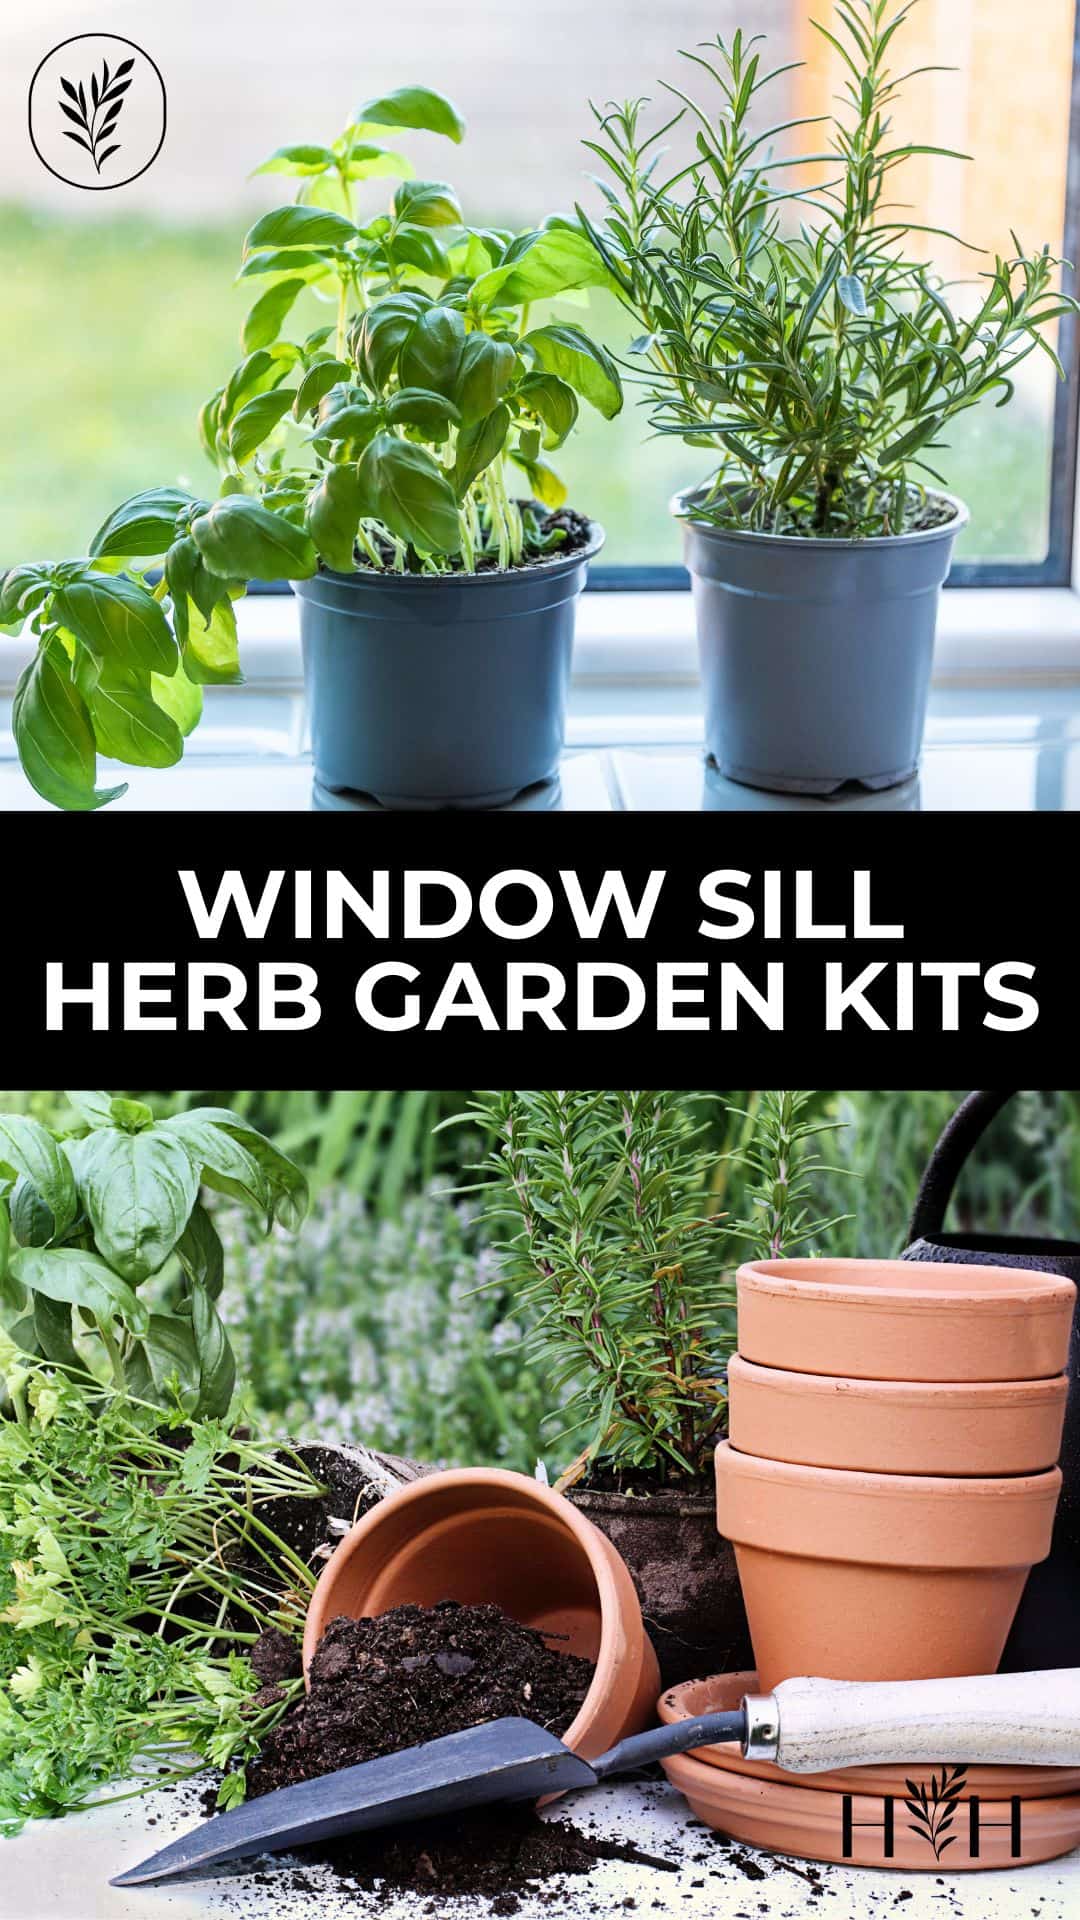 Window sill herb garden kits via @home4theharvest